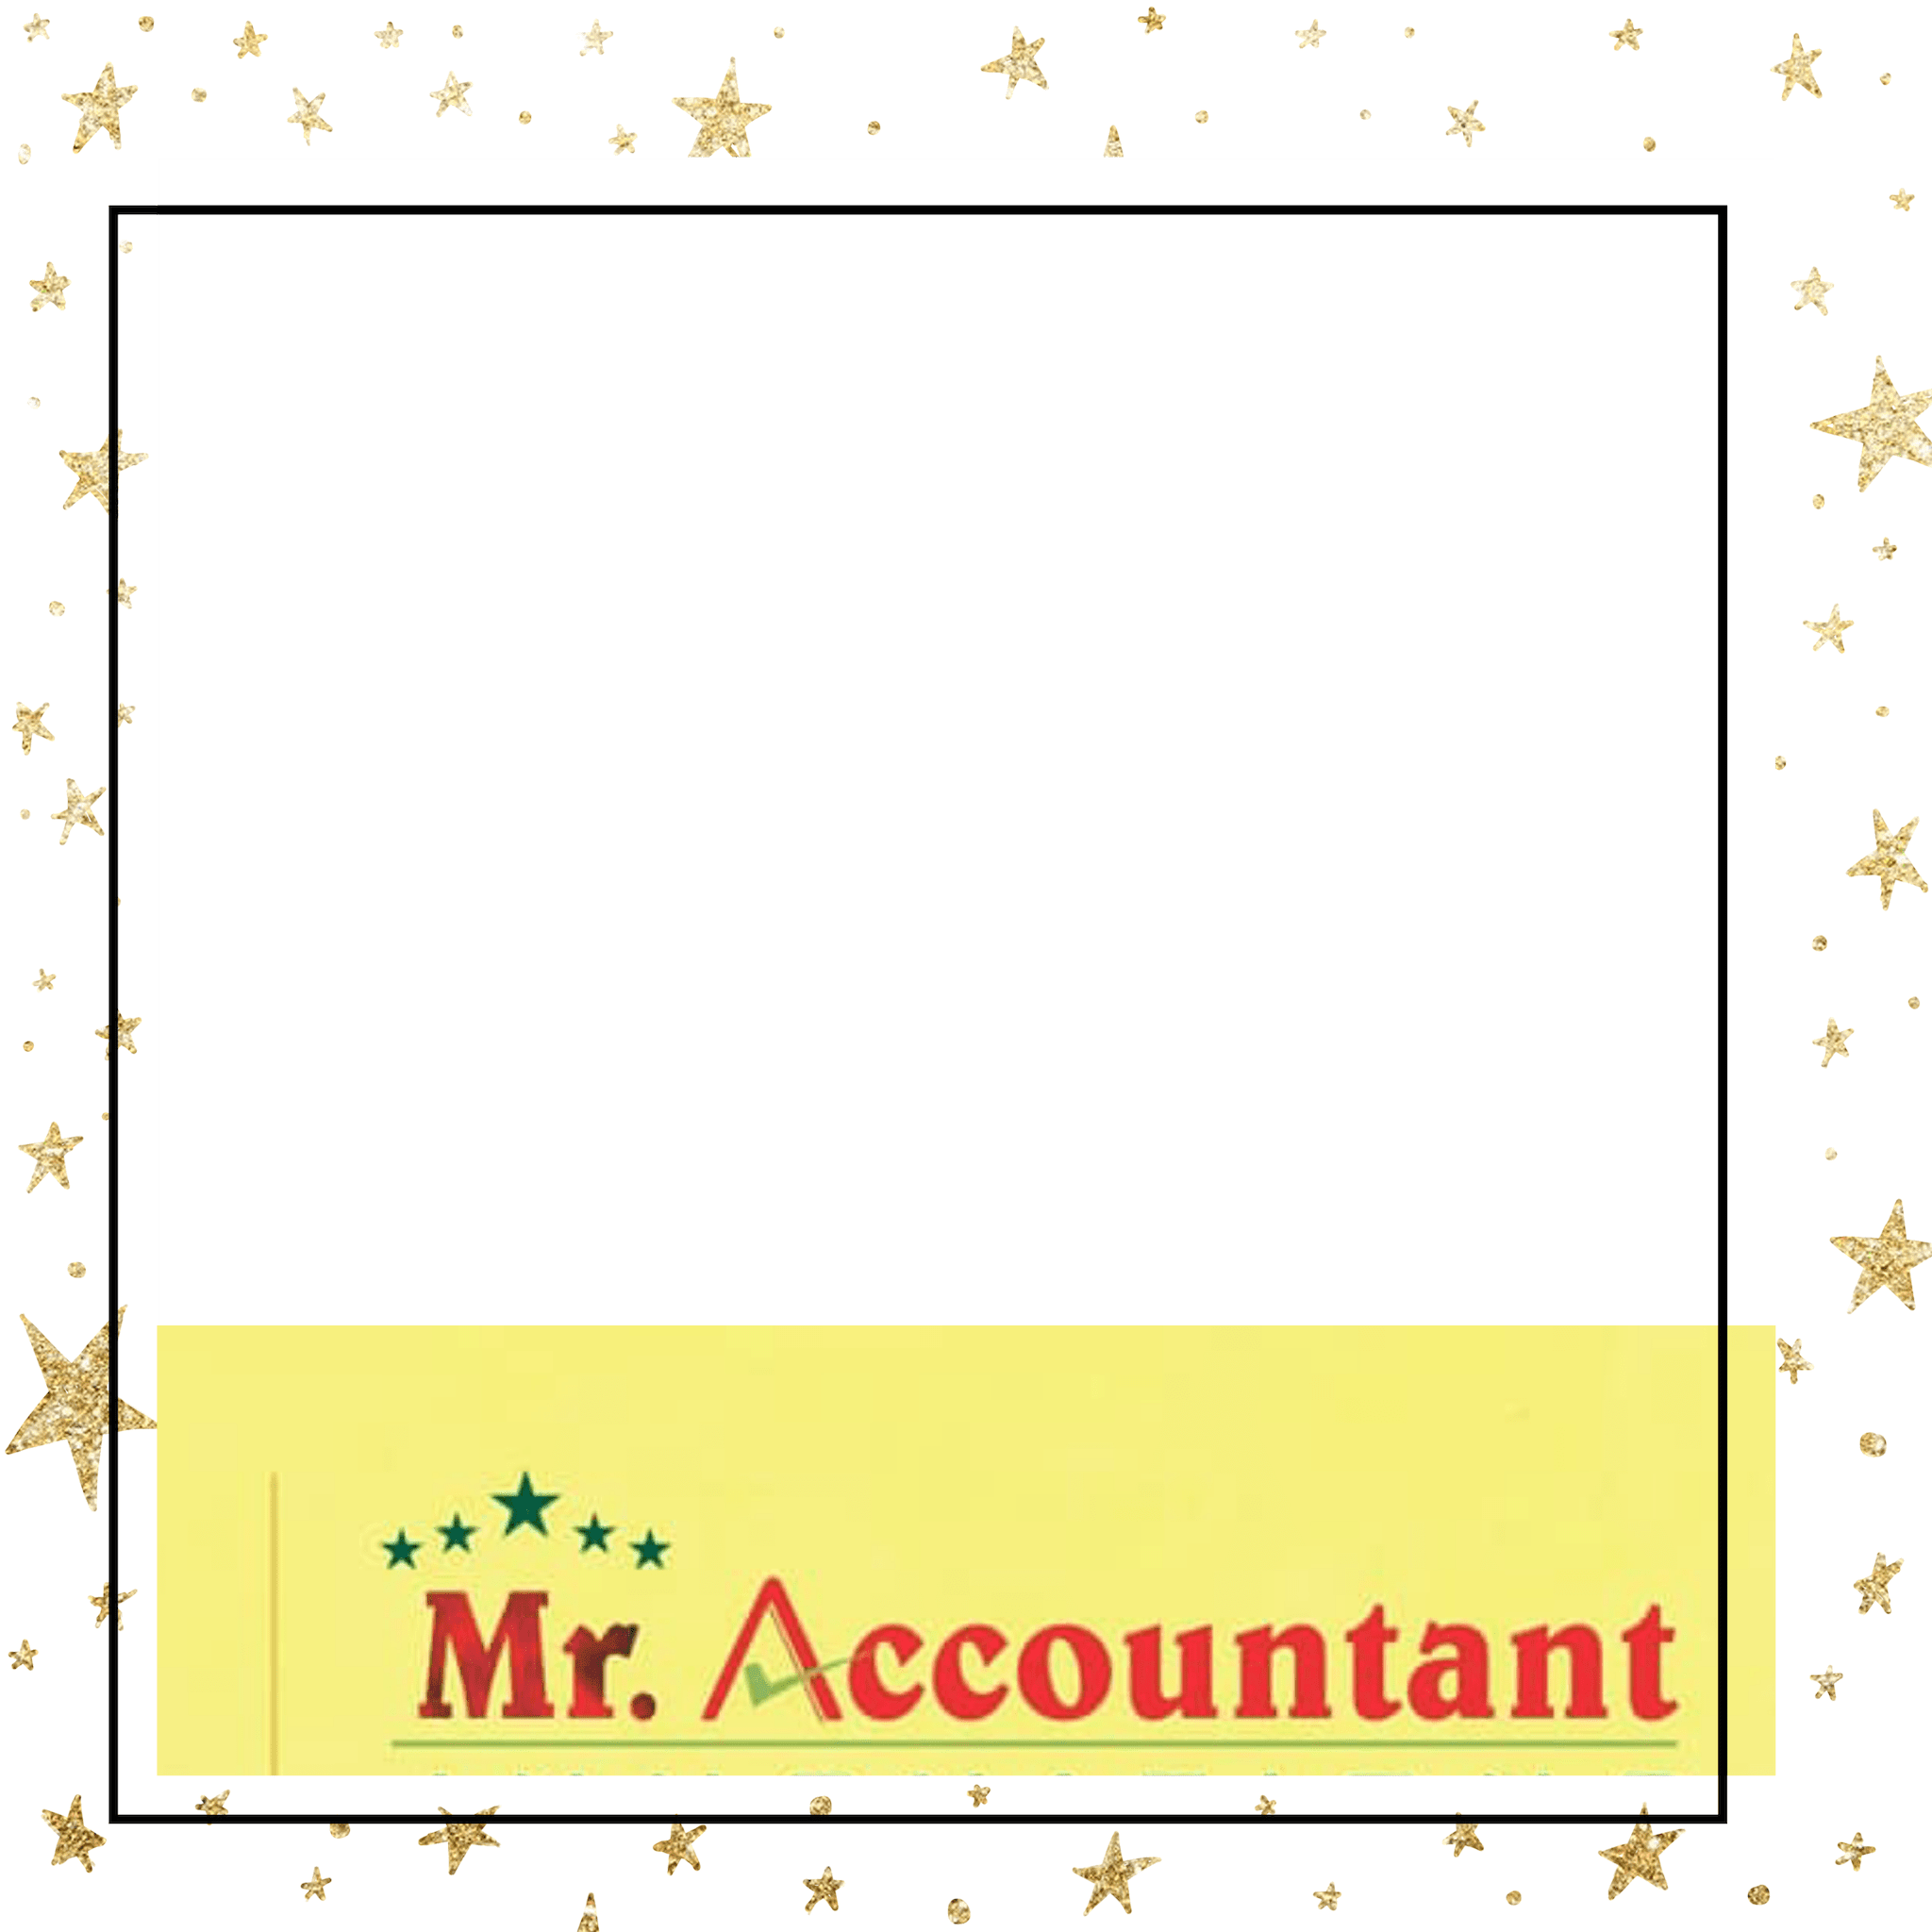 Mr. Accountant